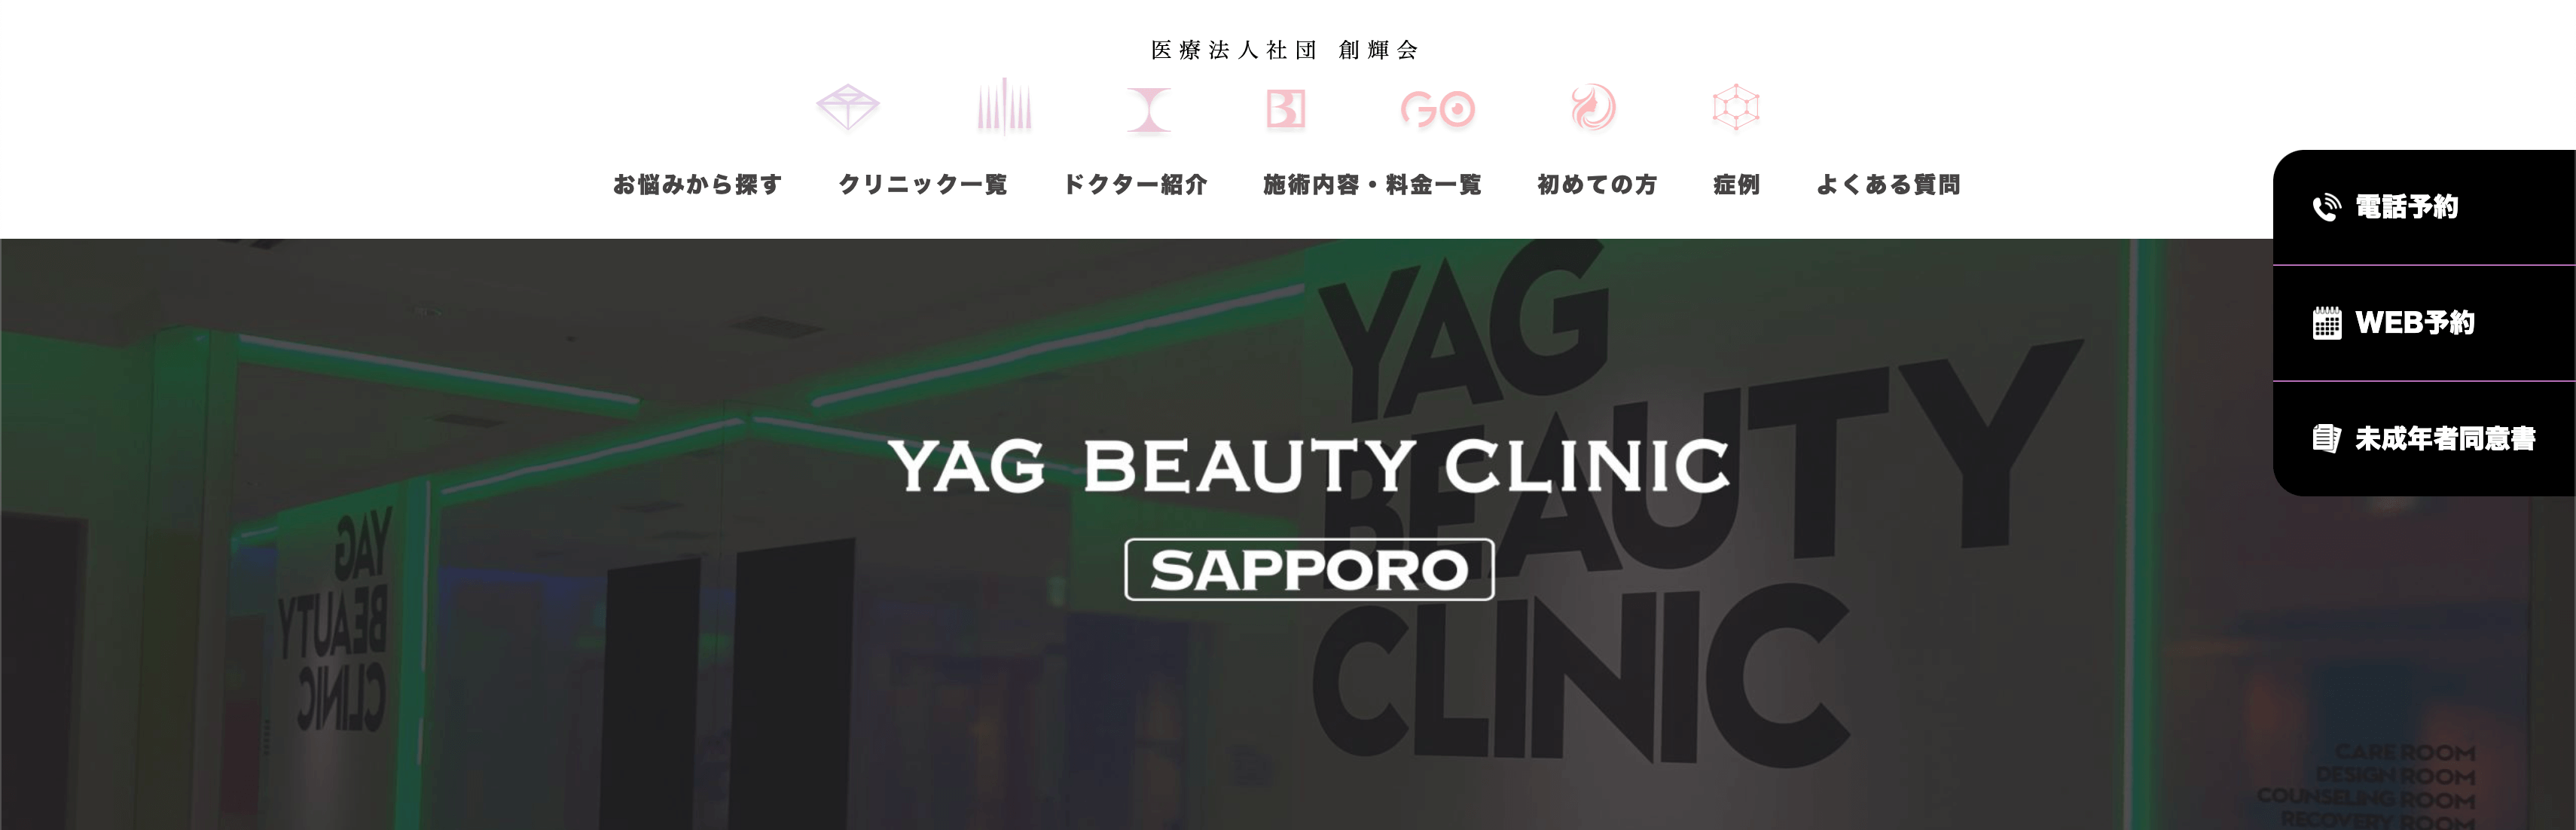 YAG BEAUTY CLINIC 札幌